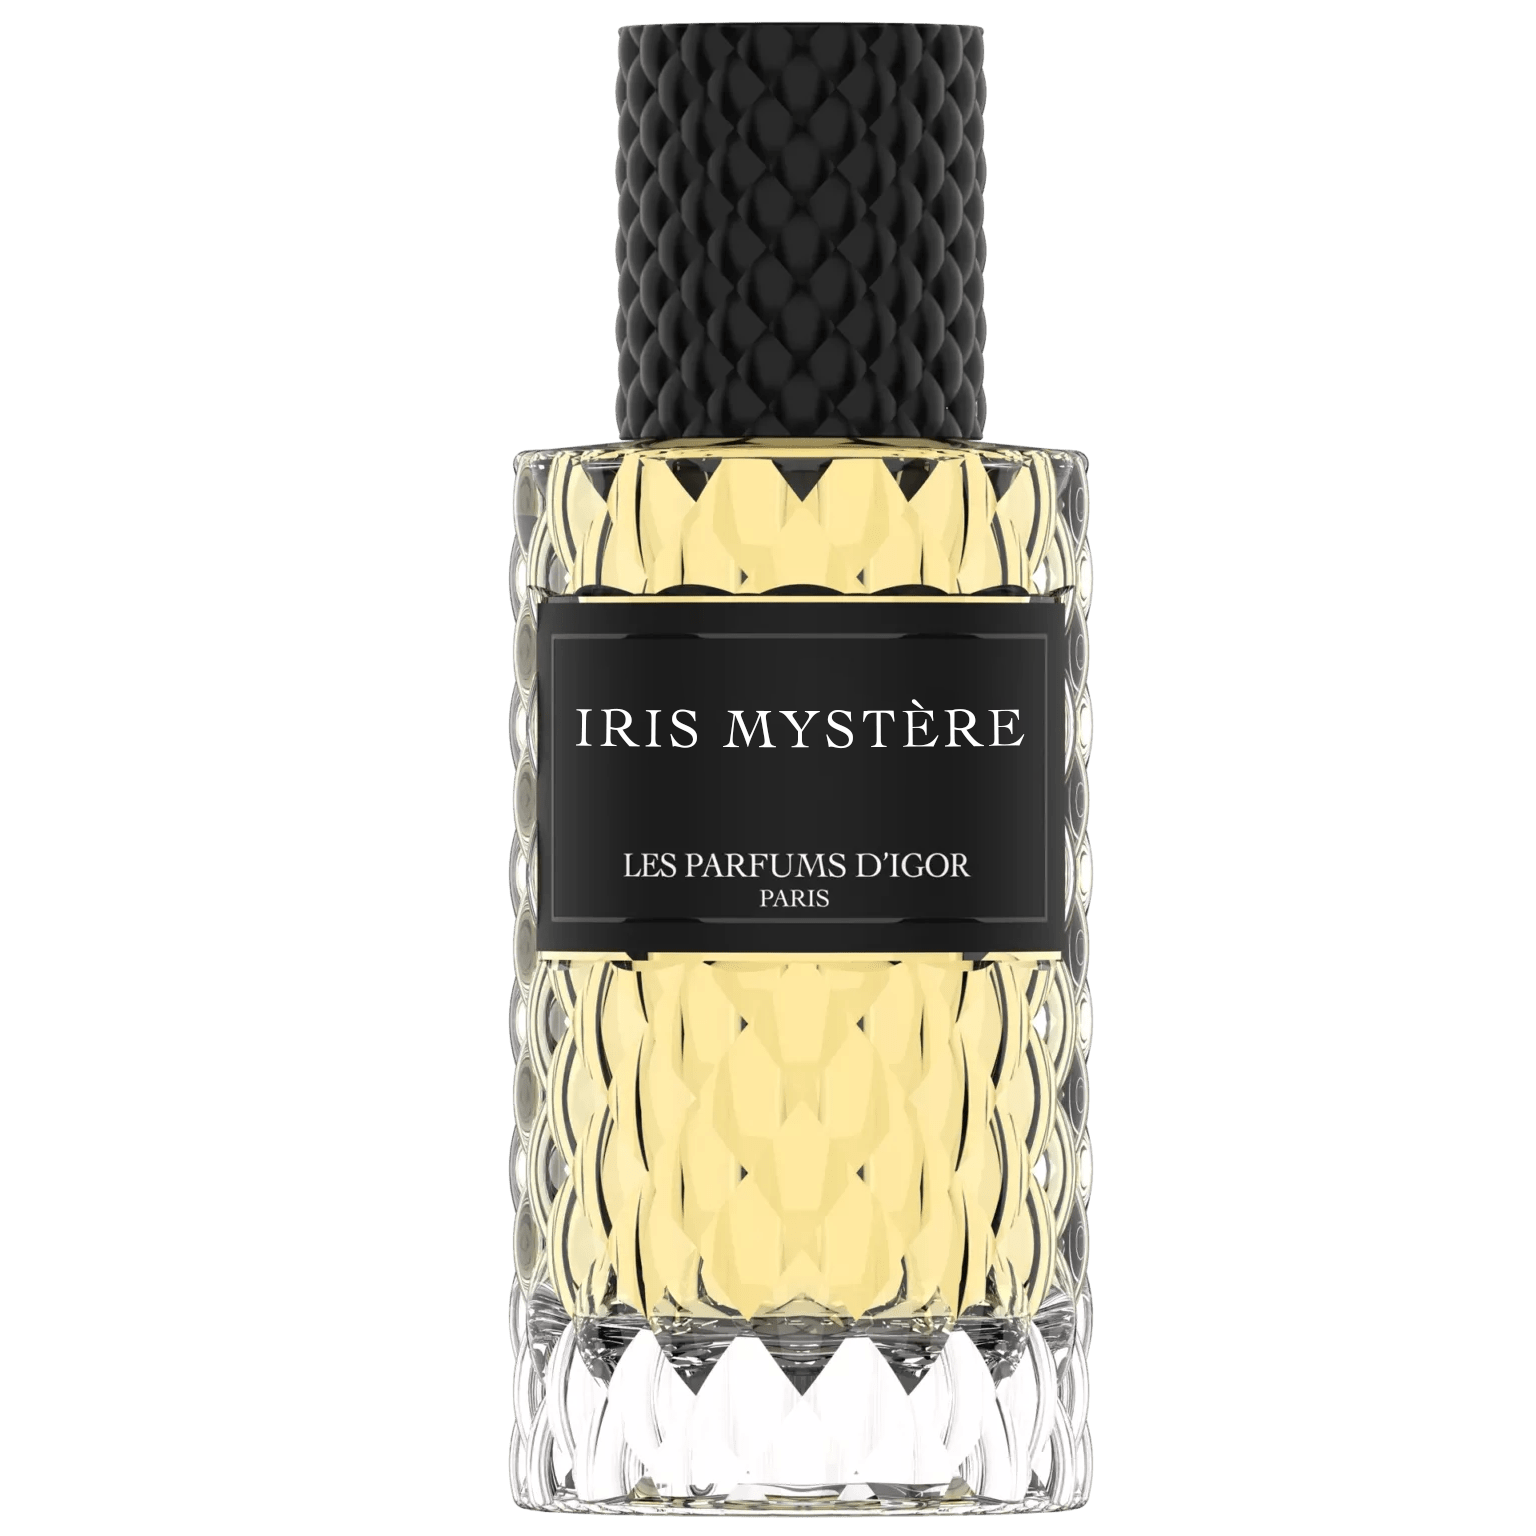 Iris mystère - Les parfums d'Igor